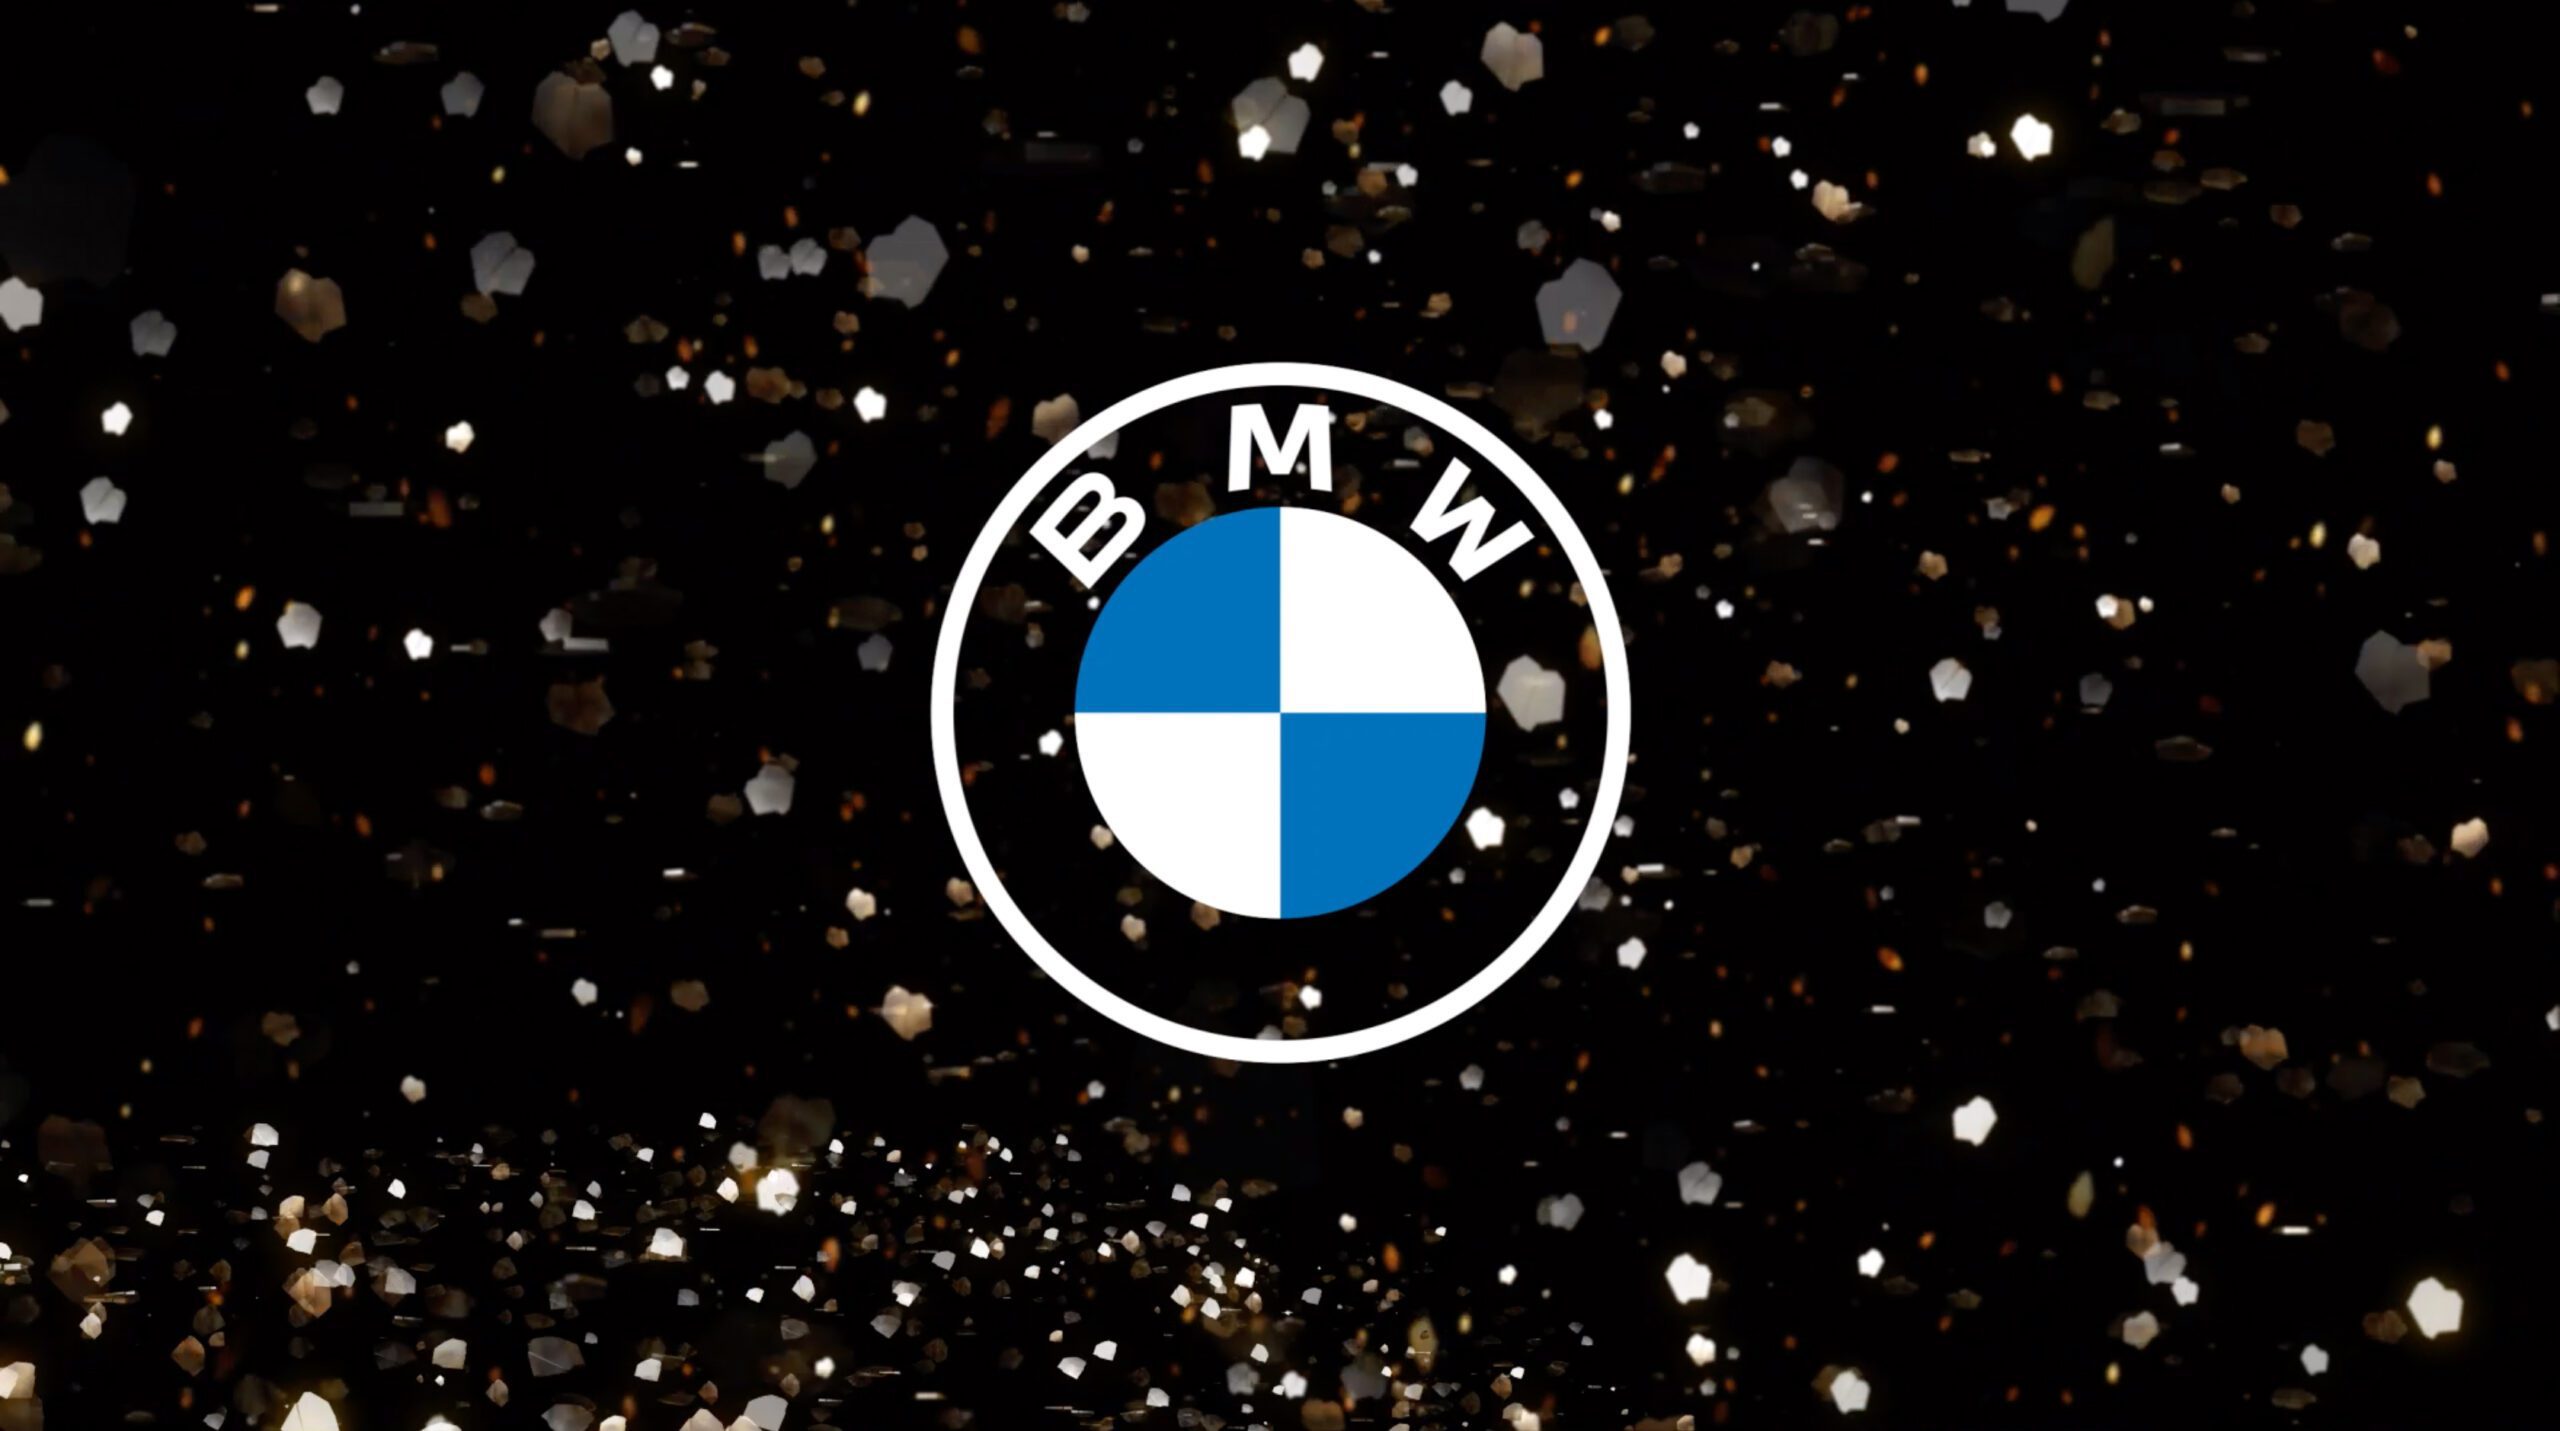 BMW logo in focus